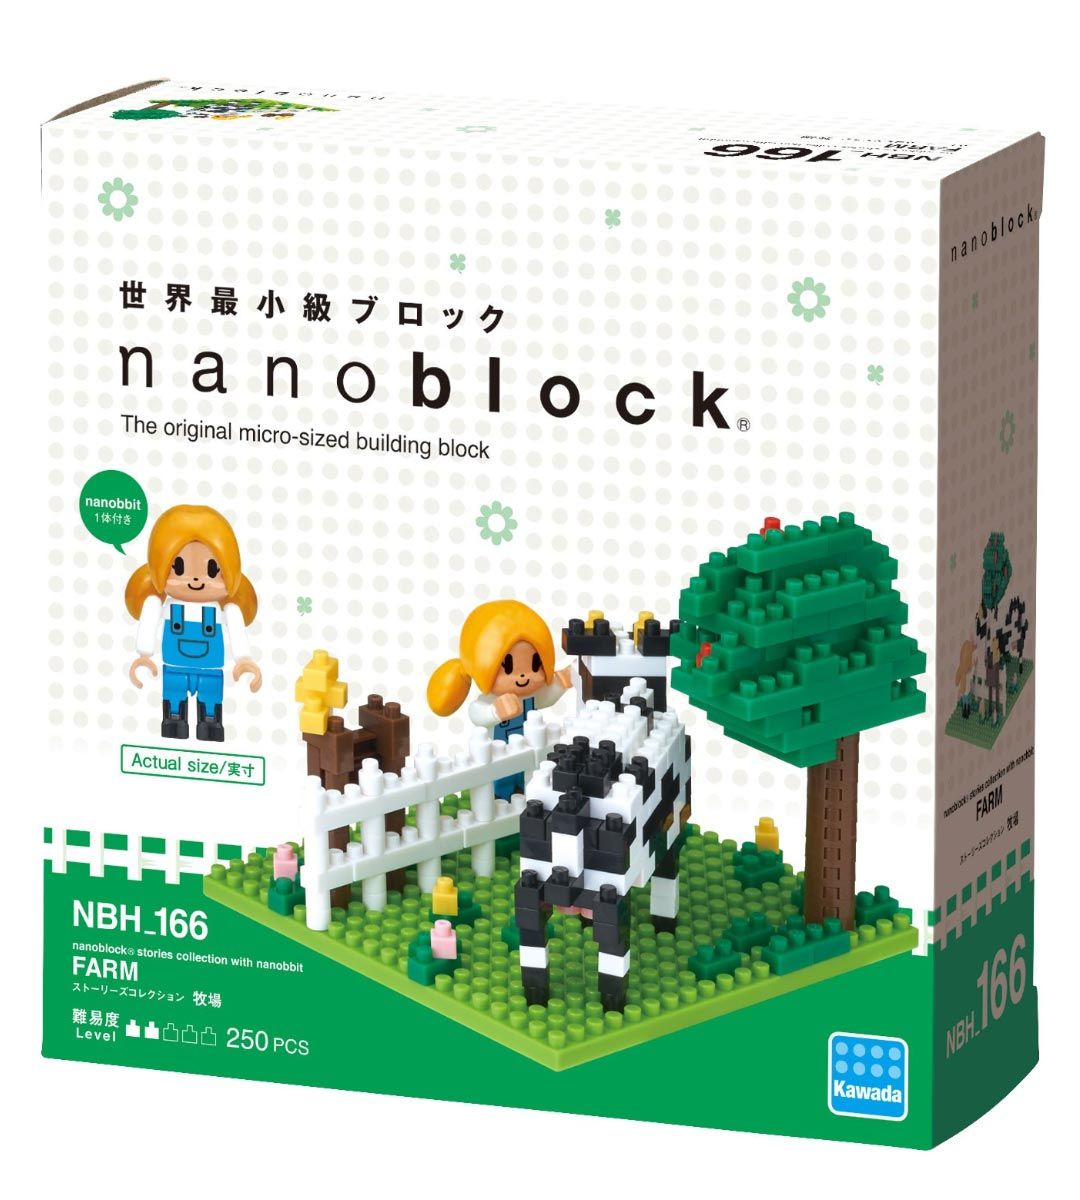 Nanoblock - Ferme- Stories collection with nanobbit - NBH 166